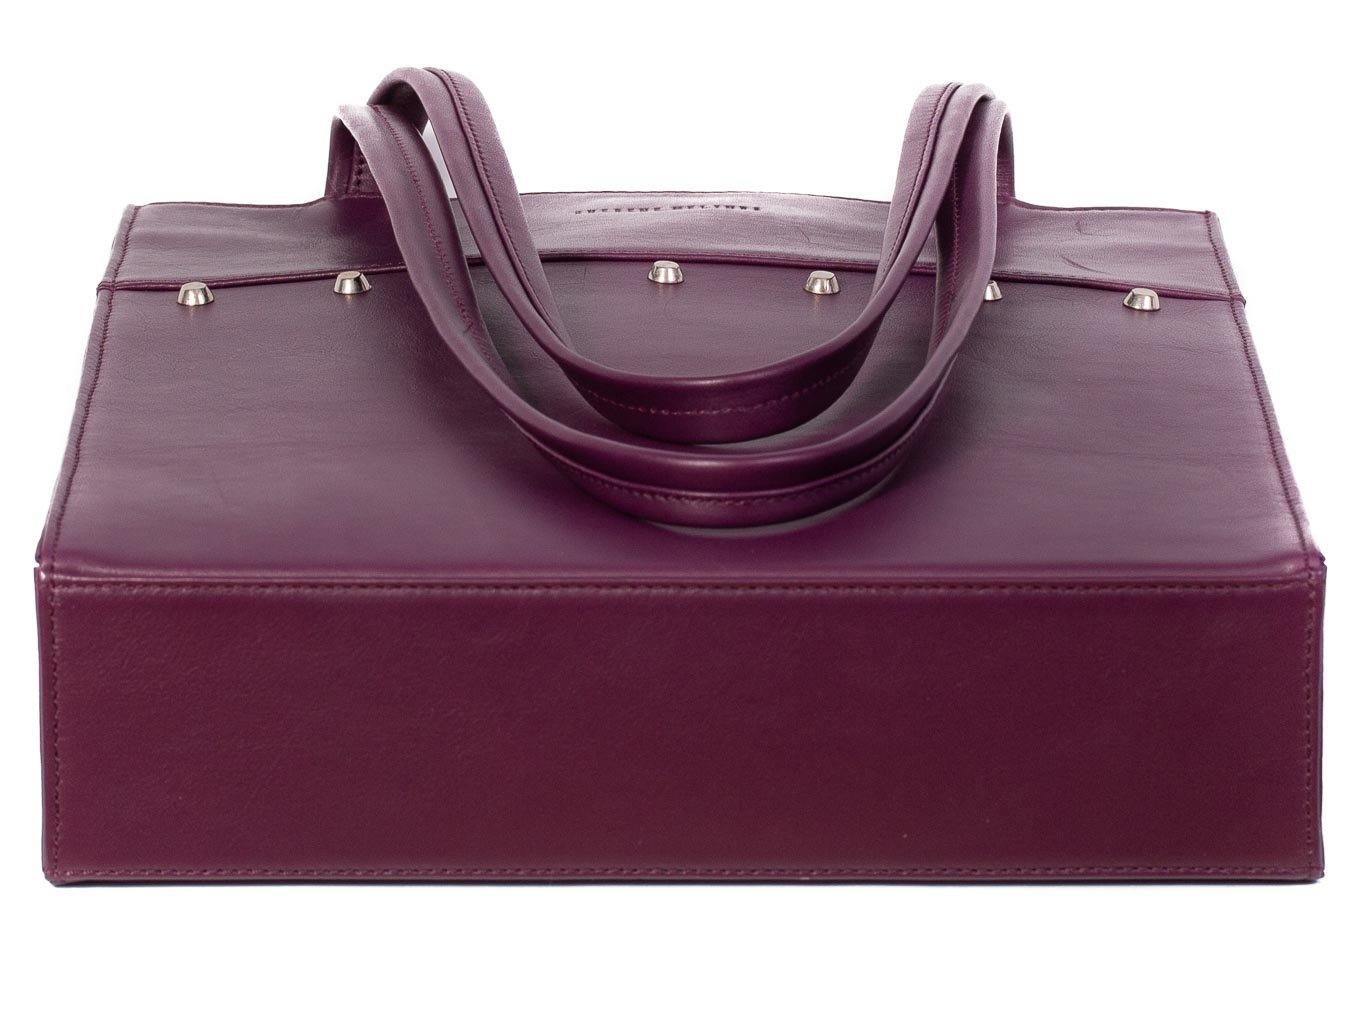 Tote Studded Handbag in Deep Purple by Sherene Melinda bottom